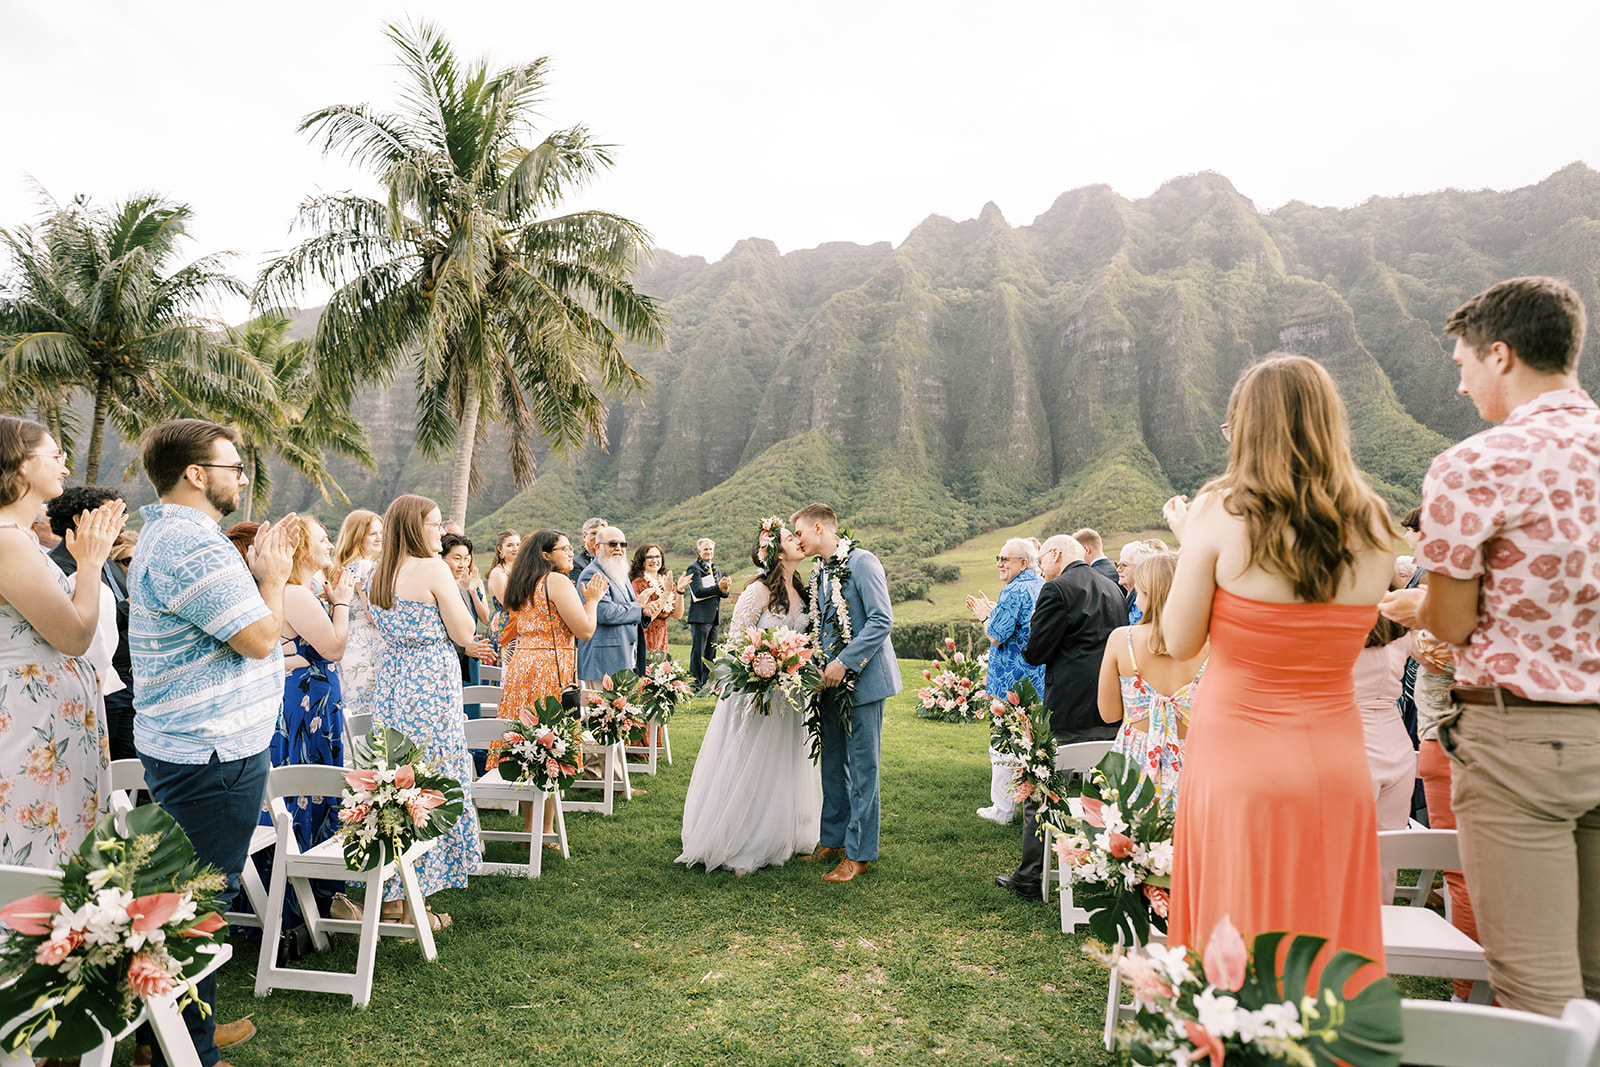 A bride and groom walk down the aisle at a hawaiian wedding.